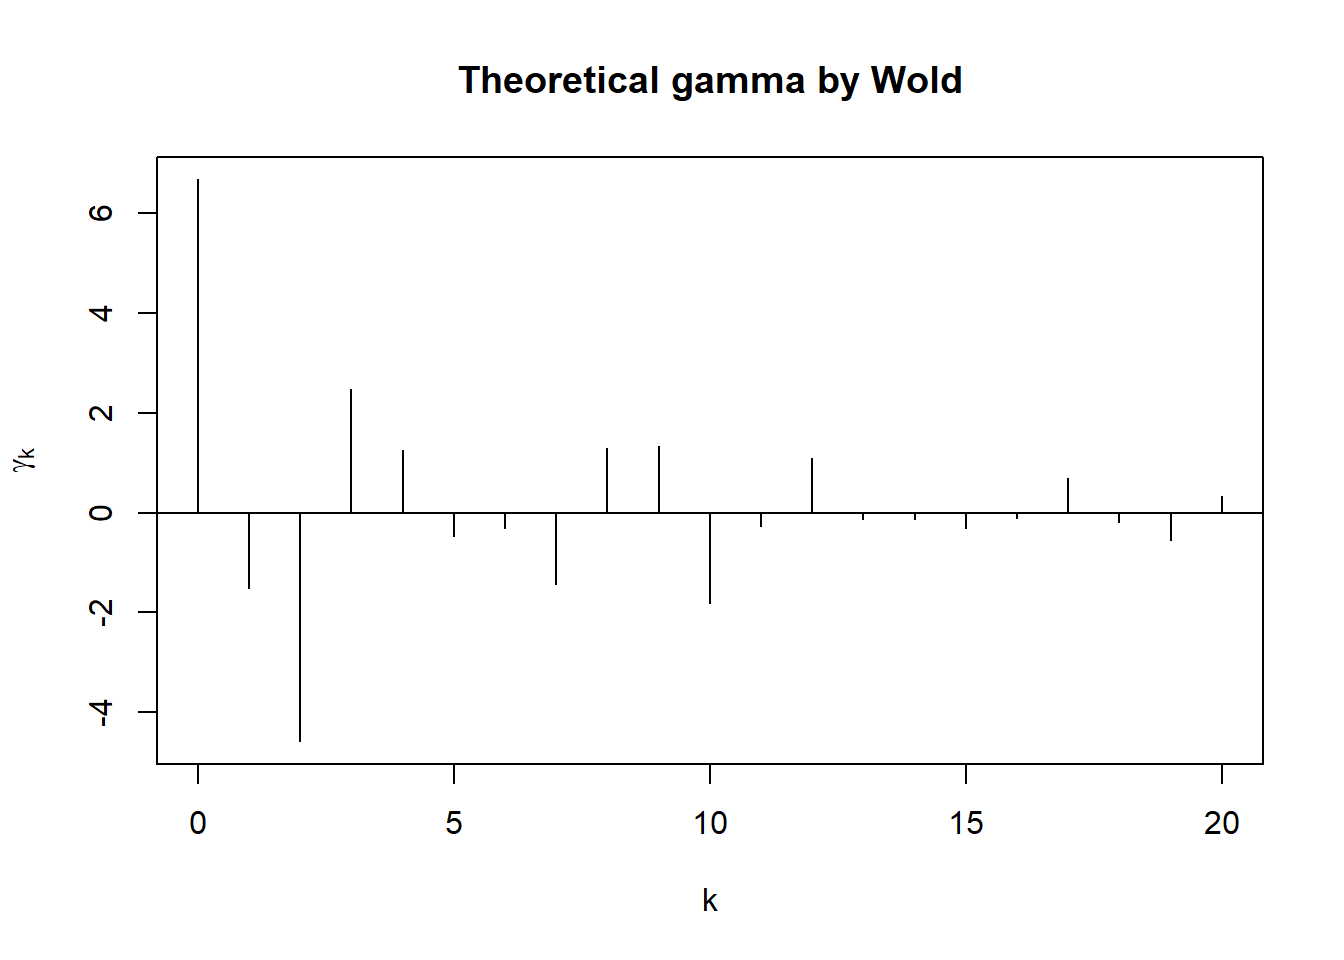 ARMA(4,2)数据的理论自协方差函数